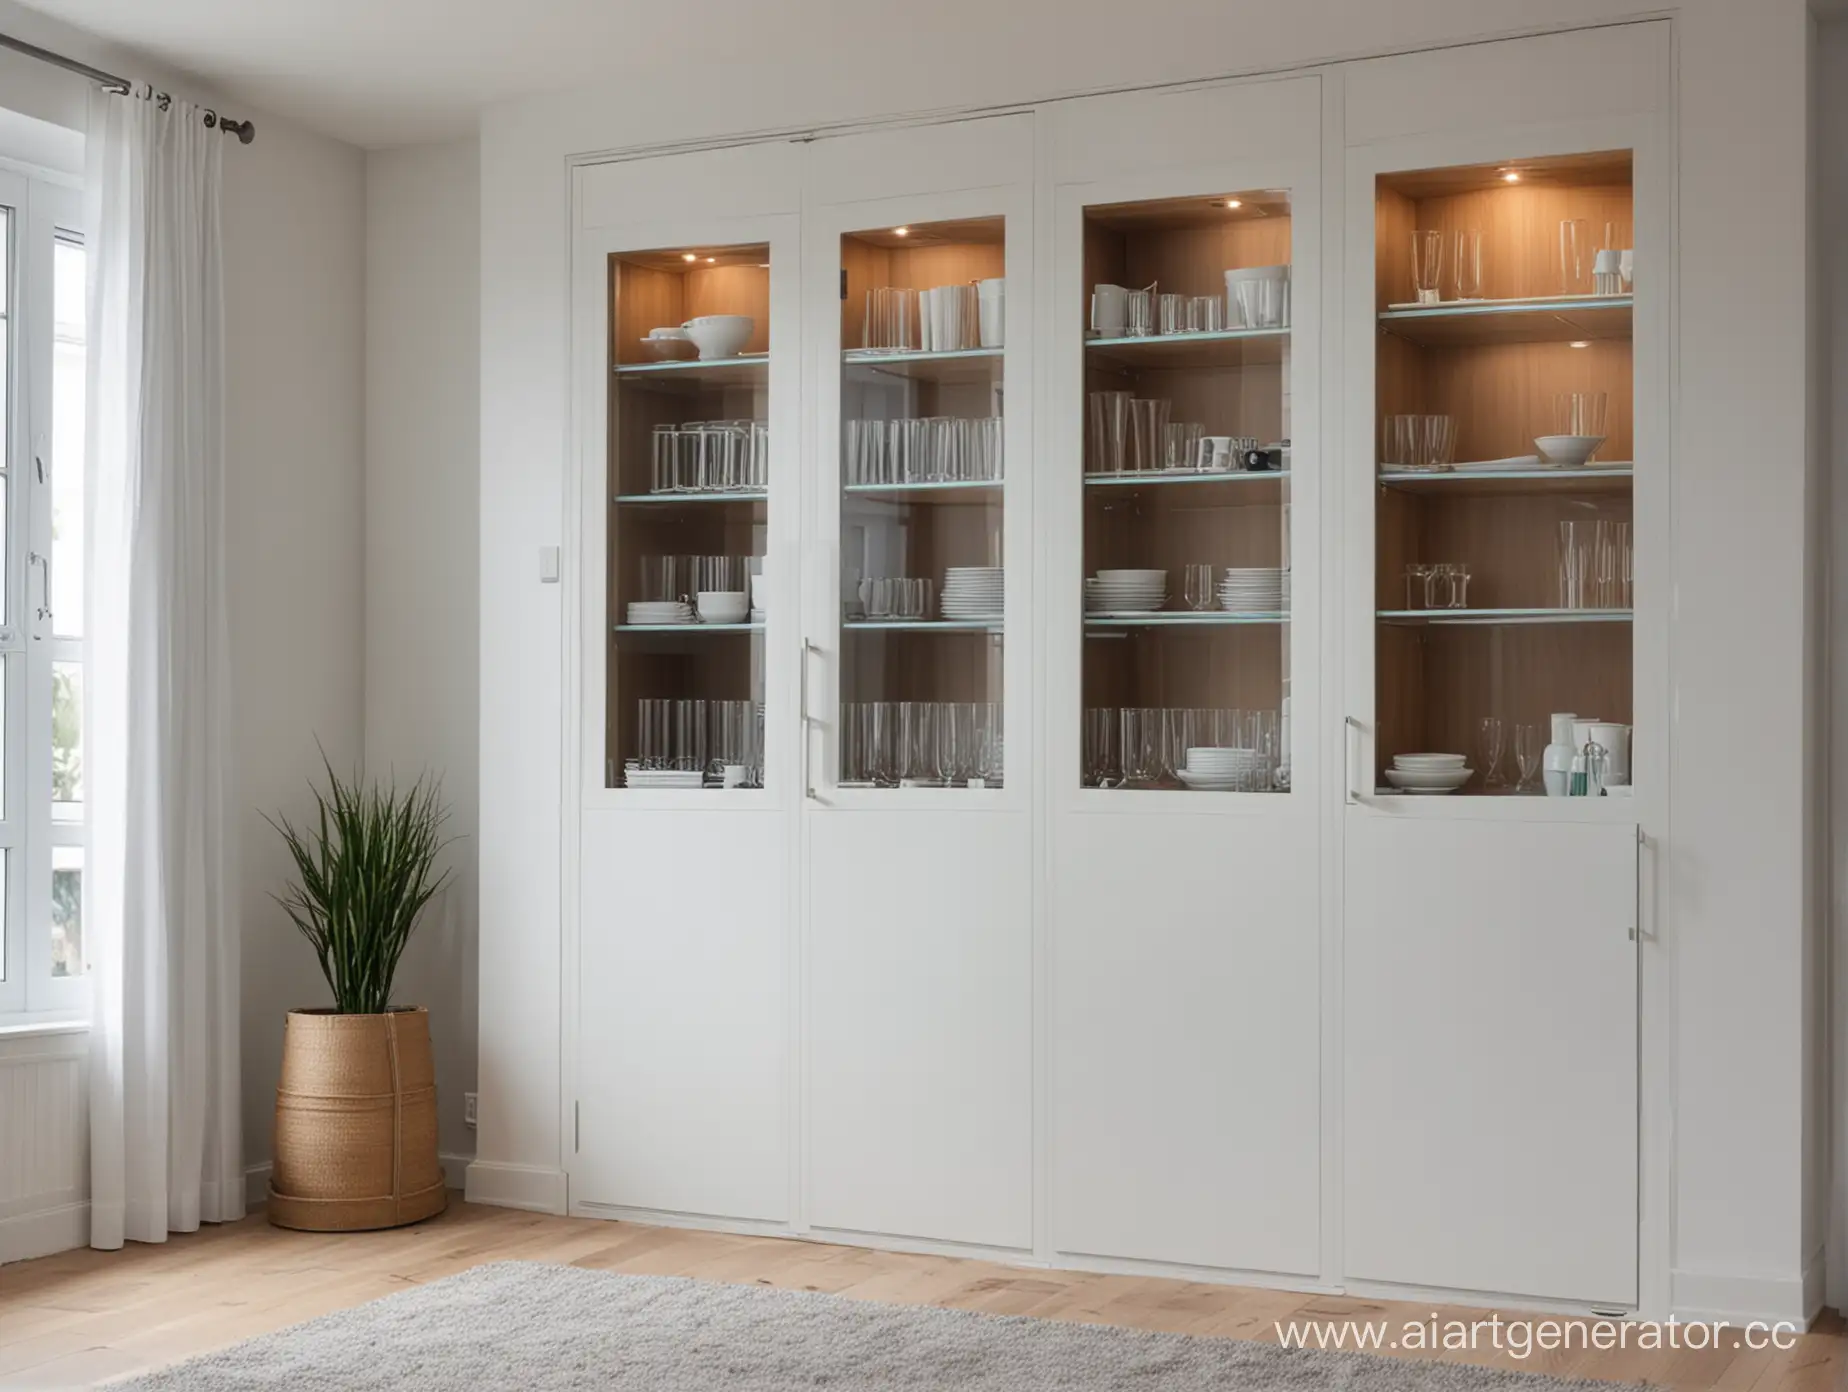 Modern-Interior-with-GlassDoor-Cabinets